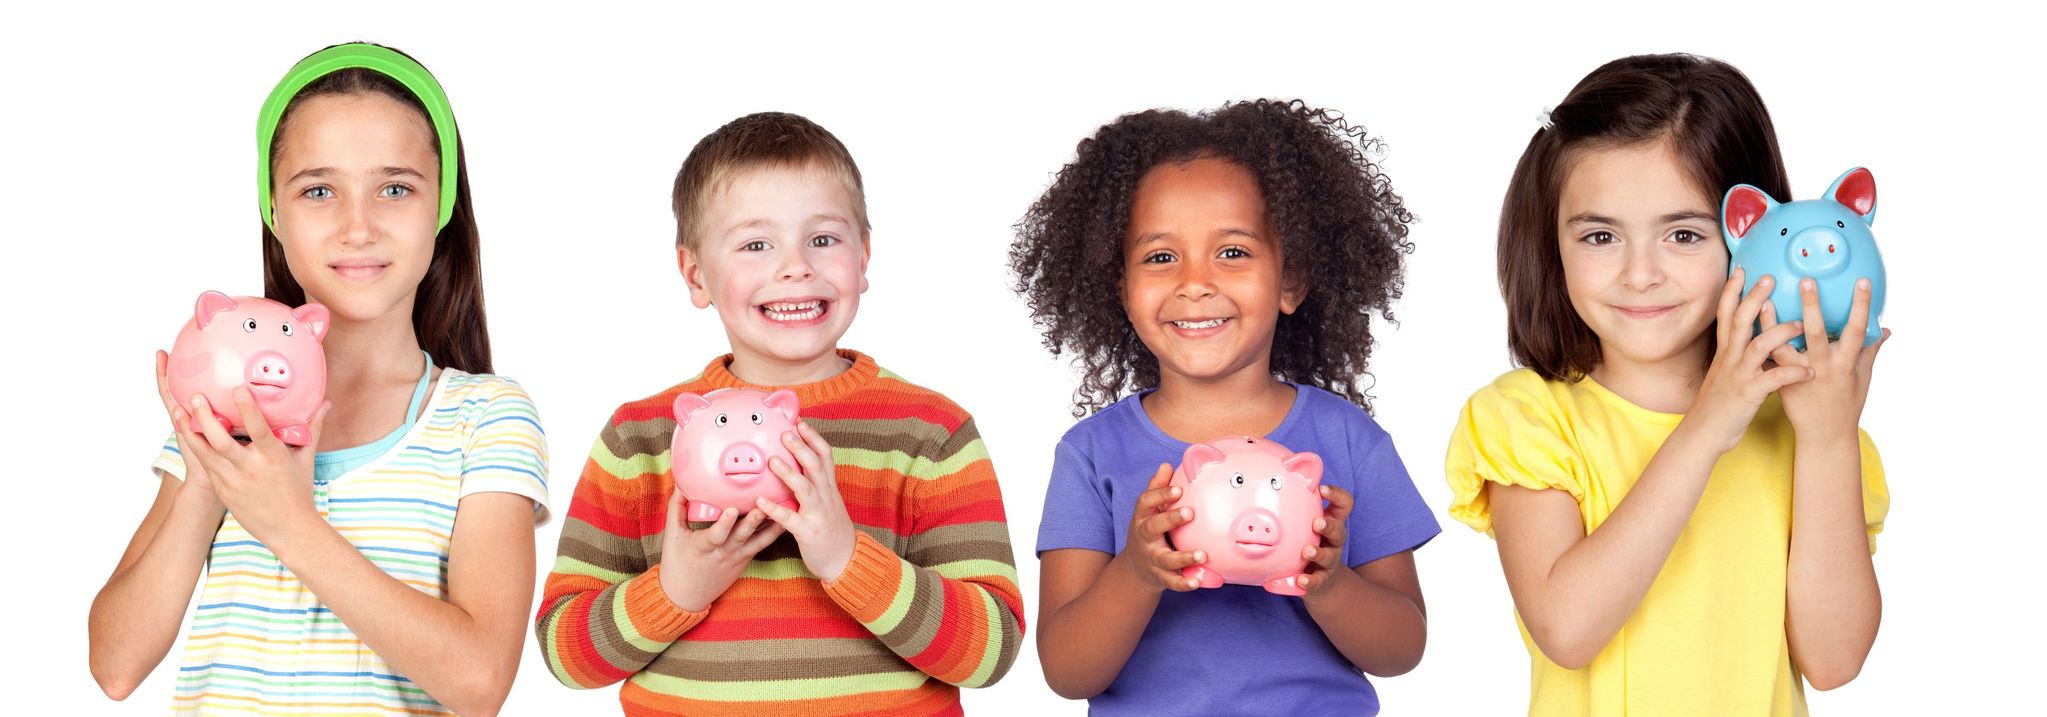 Group of kids smiling holding piggy banks